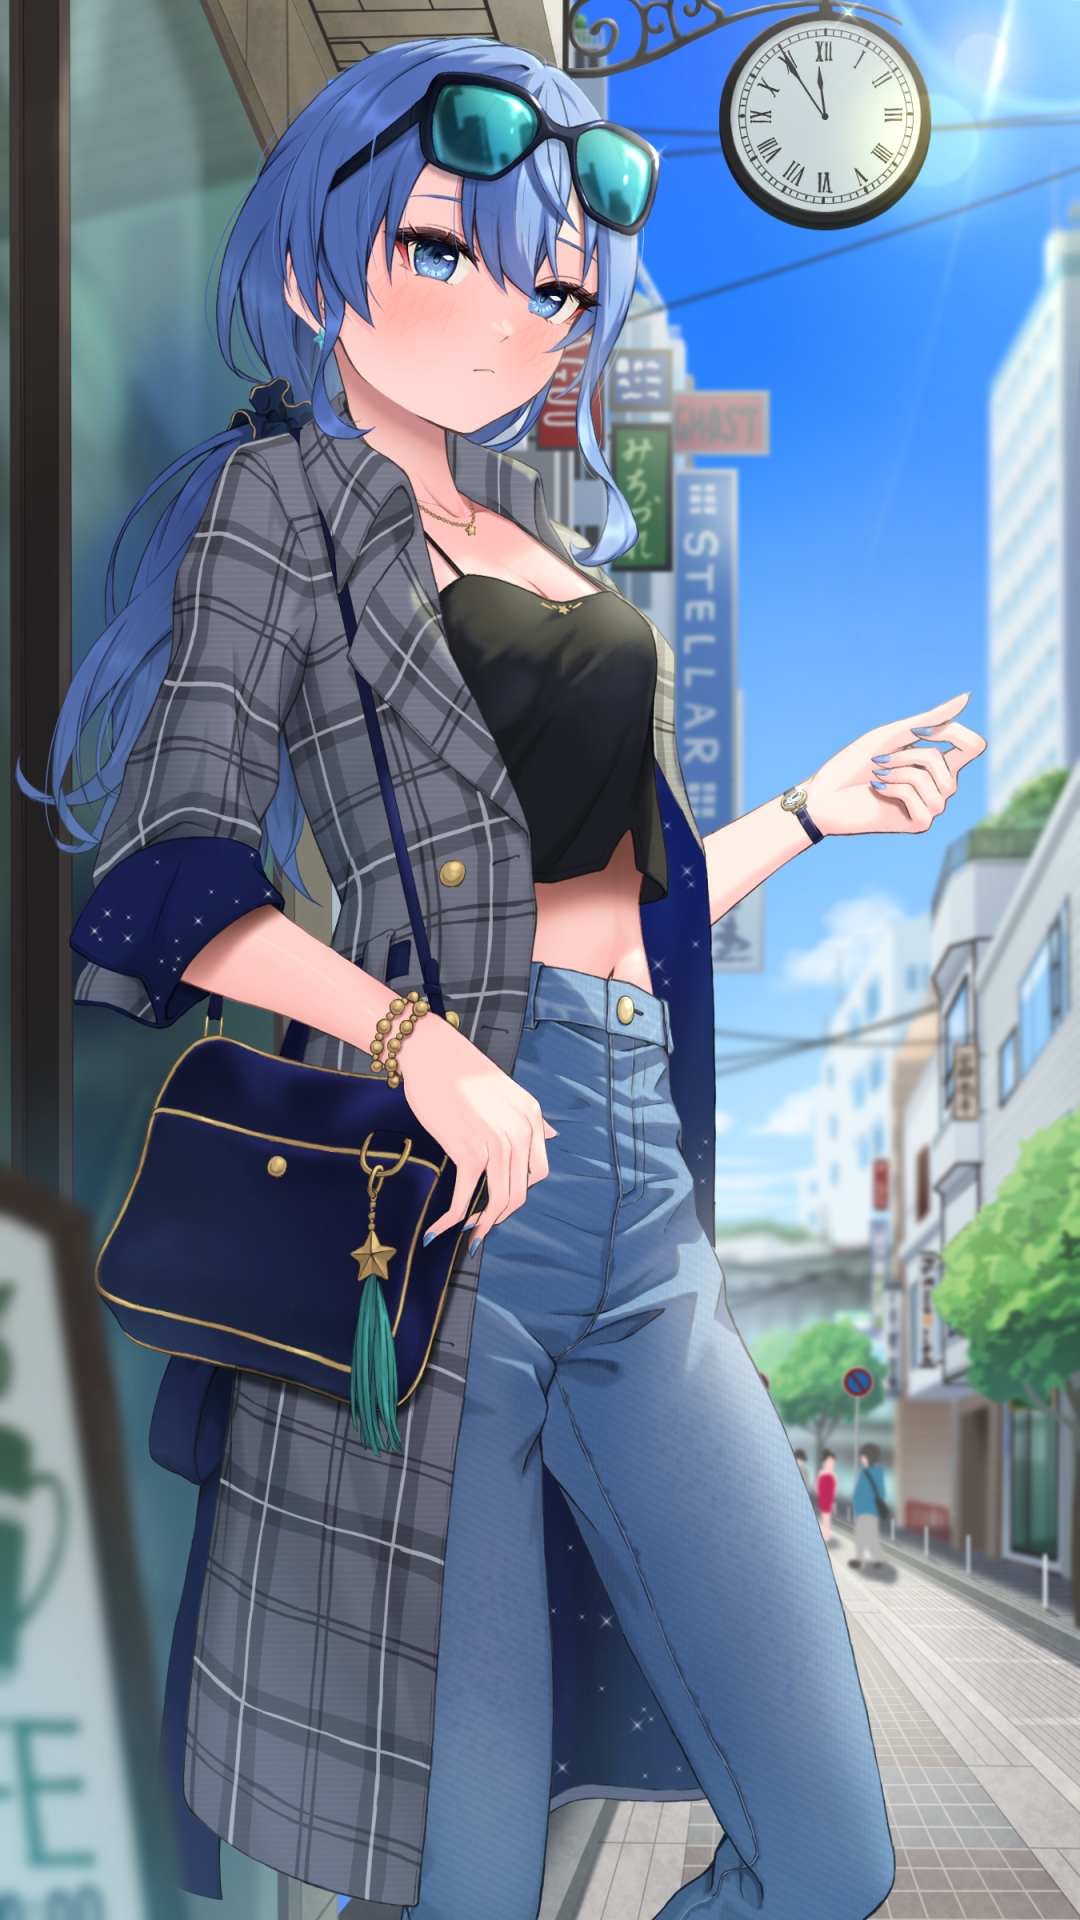 Anime Anime Girls Digital Art Artwork 2D Pixiv Bare Midriff Looking At Viewer Portrait Display Purse 1080x1920